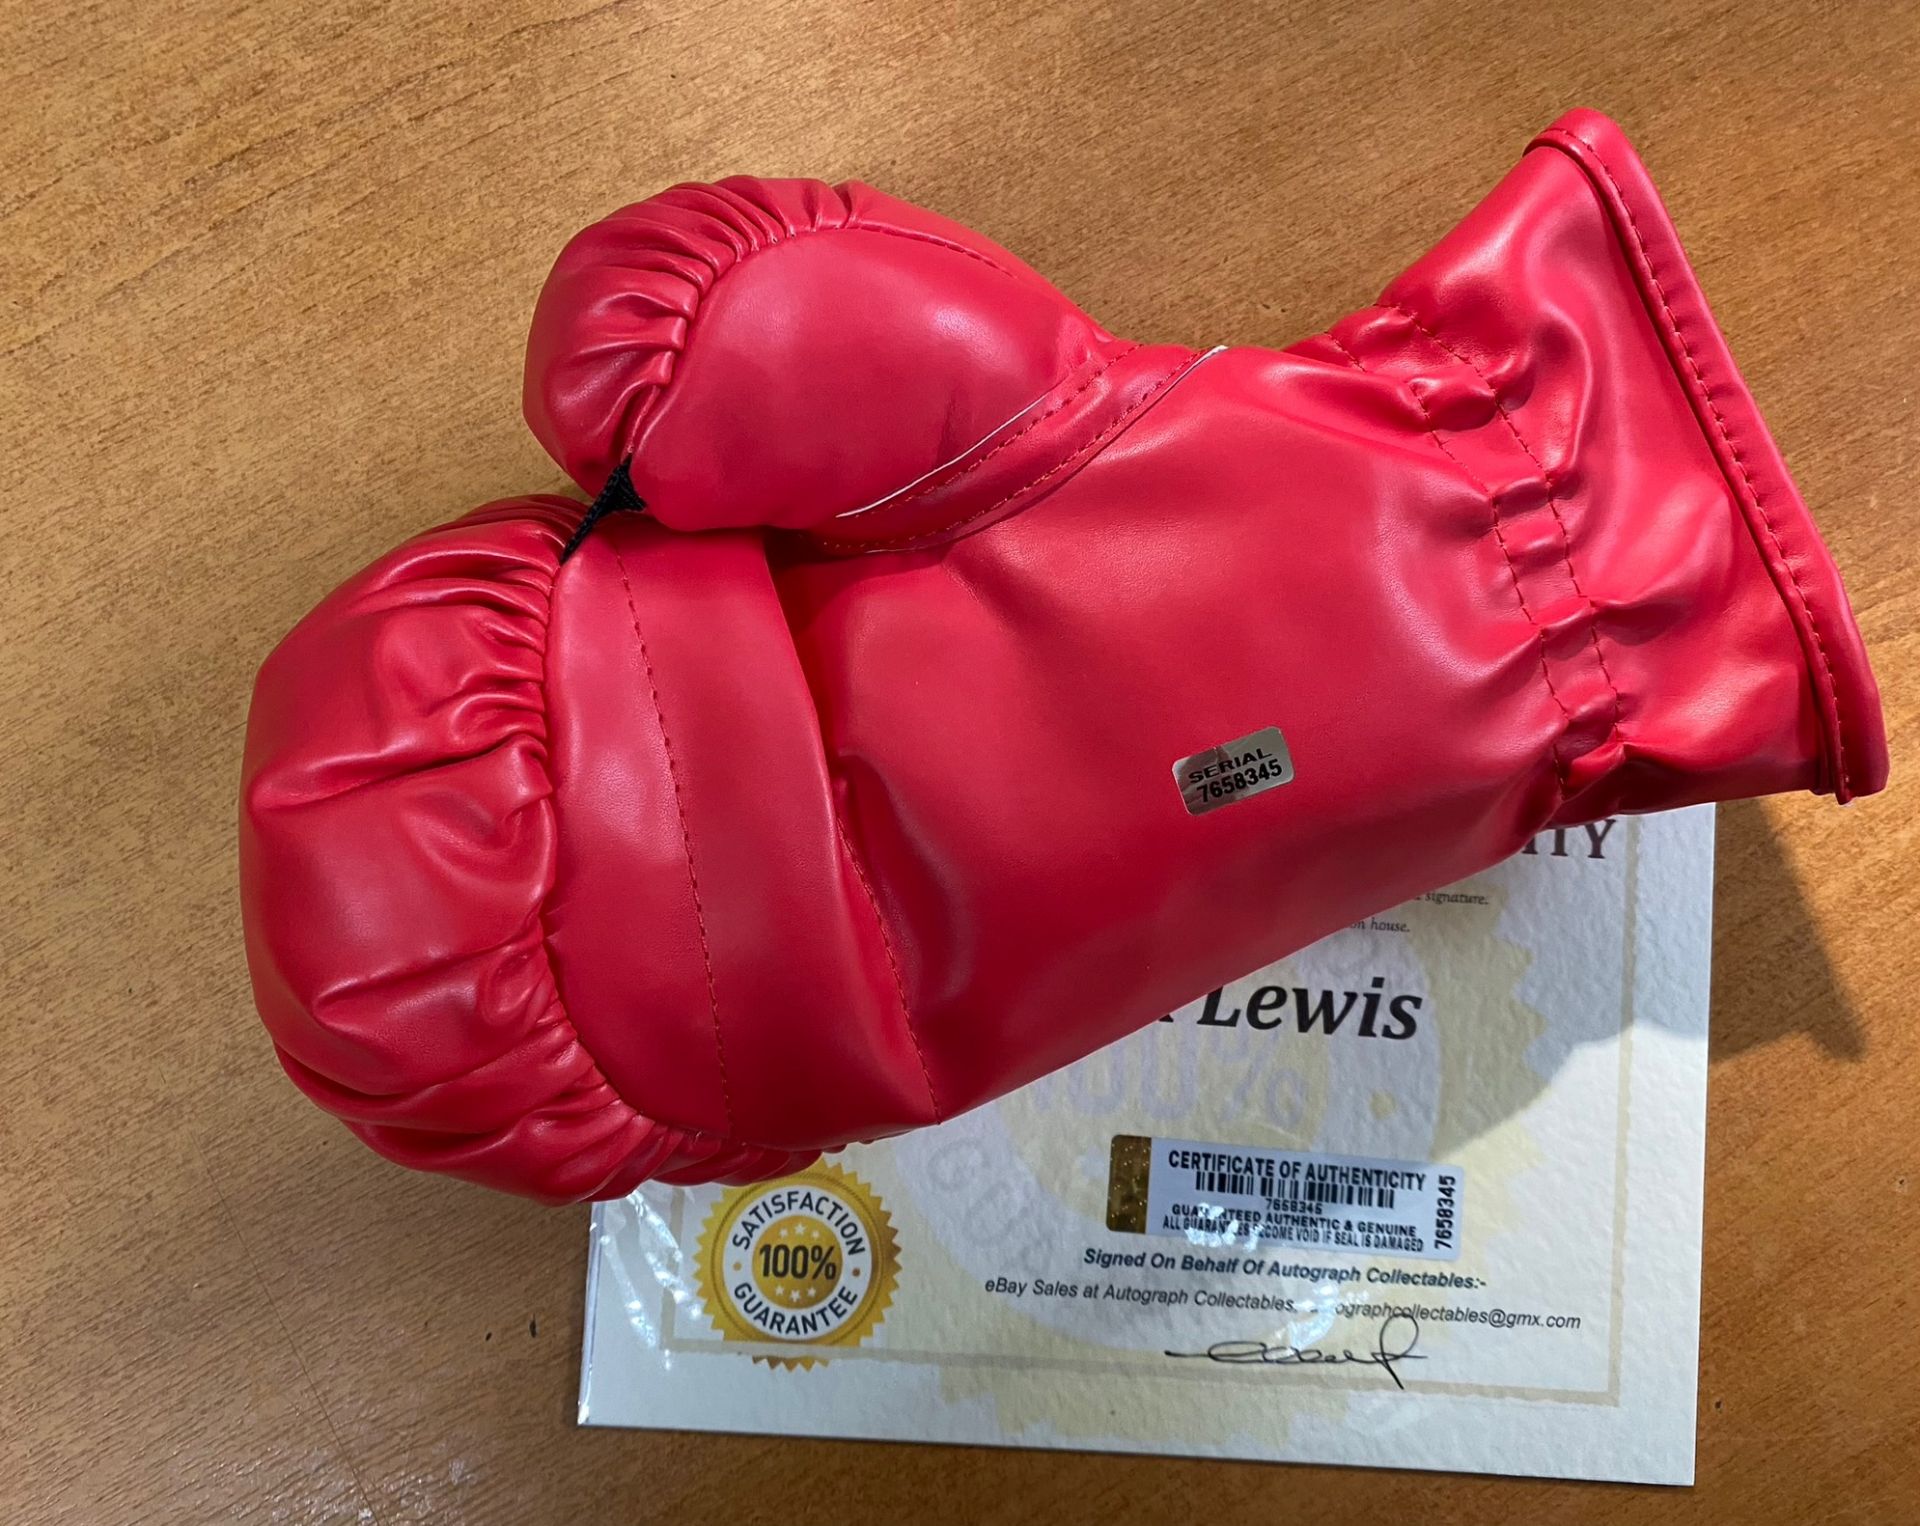 Lennox Lewis Signed Boxing Glove - Image 3 of 3